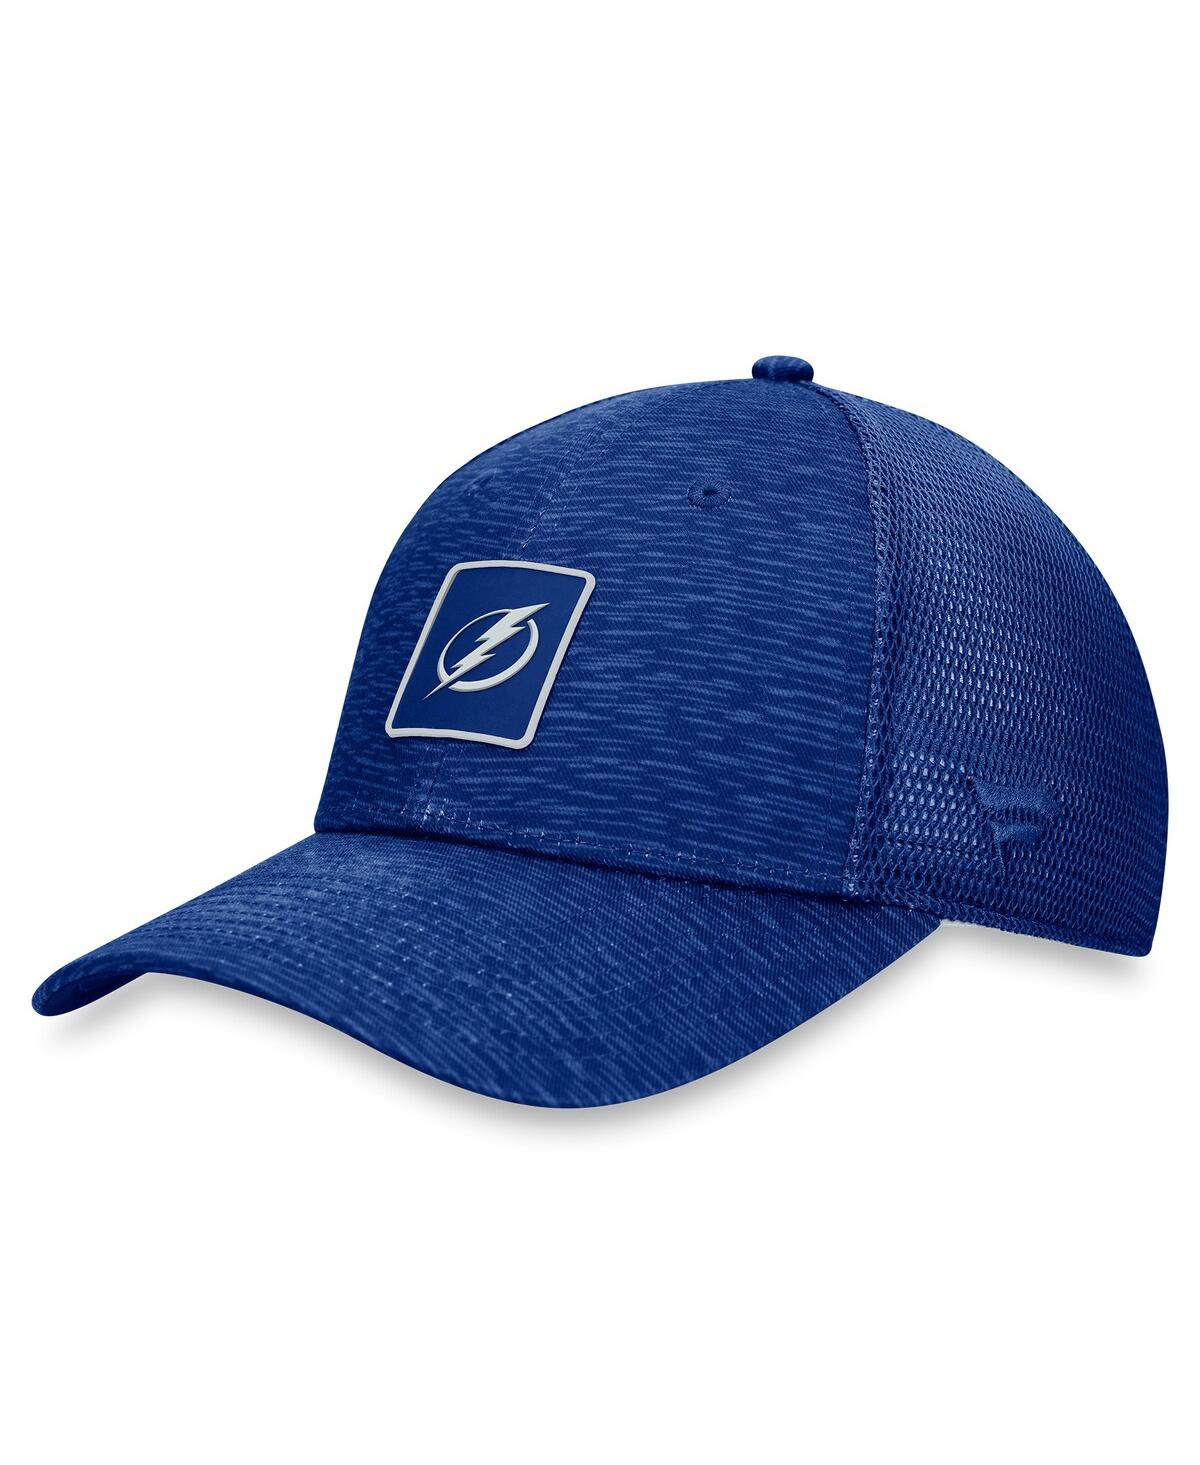 Men's and Women's Fanatics Blue Tampa Bay Lightning Authentic Pro Road Trucker Adjustable Hat - Blue